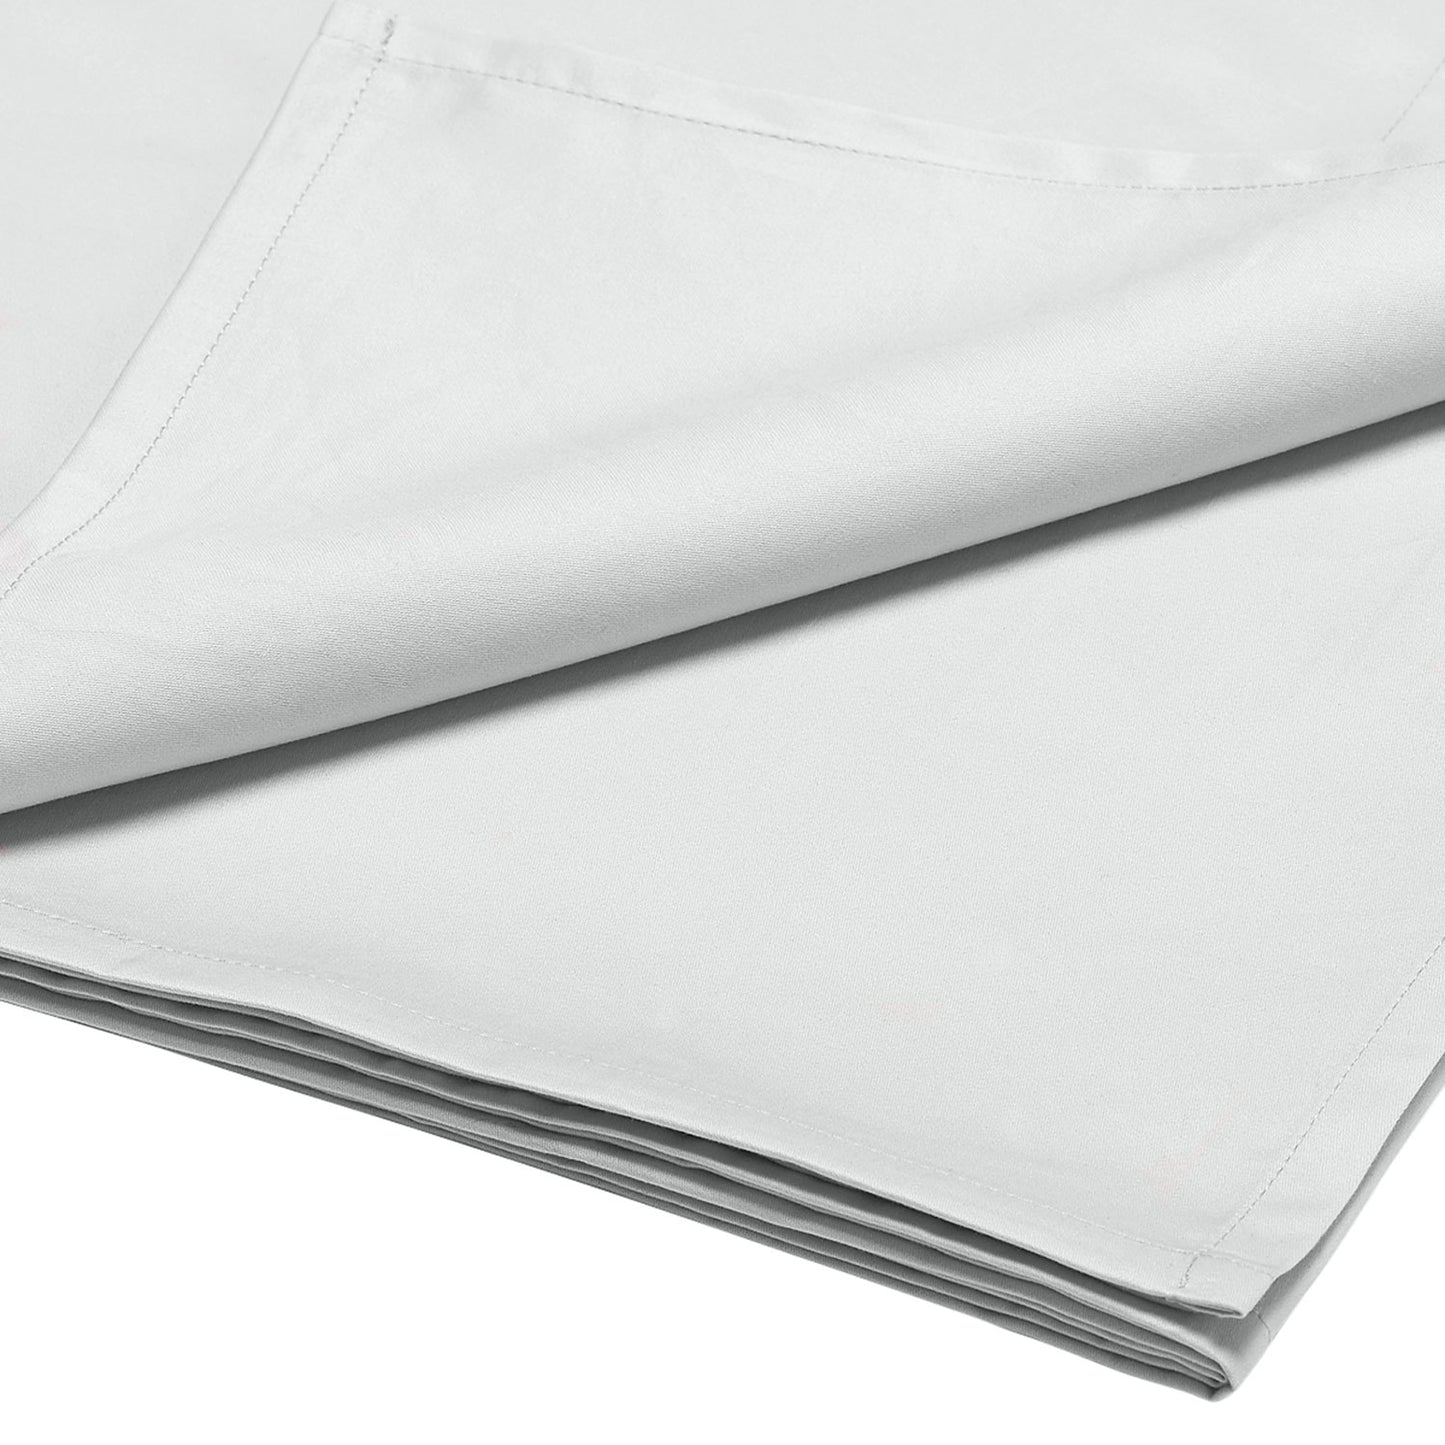 Bianca Silver 800TC Cotton Sateen Flat Sheet